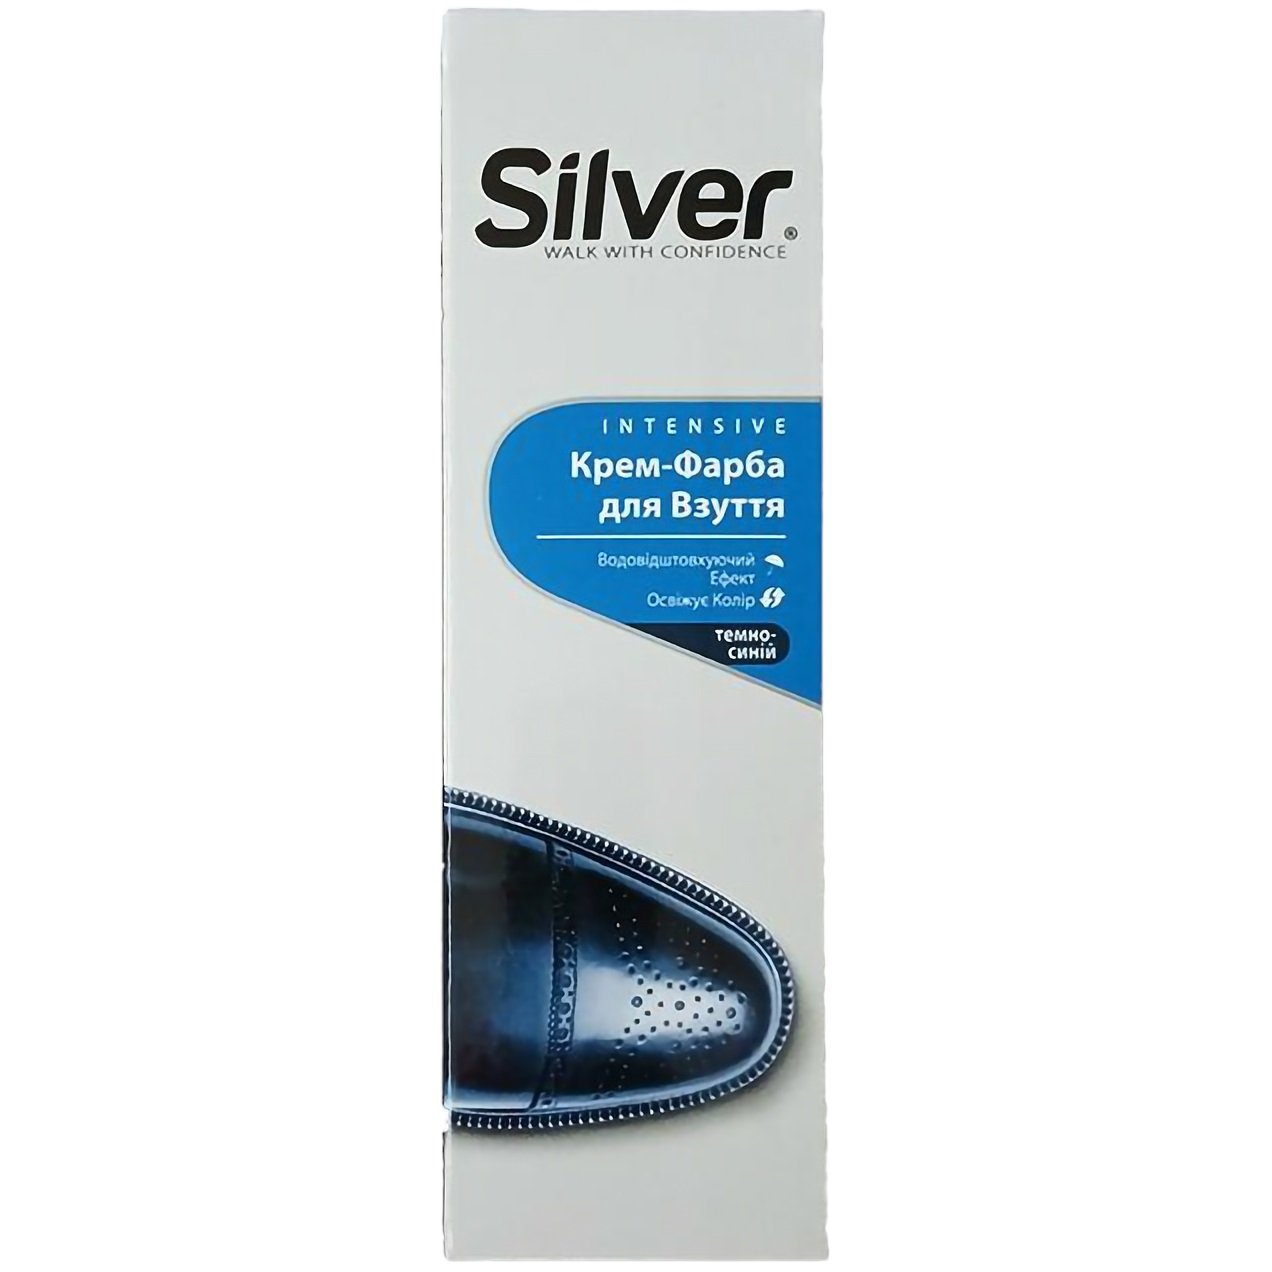 Крем-фарба для взуття Silver, синя, 75 мл - фото 1